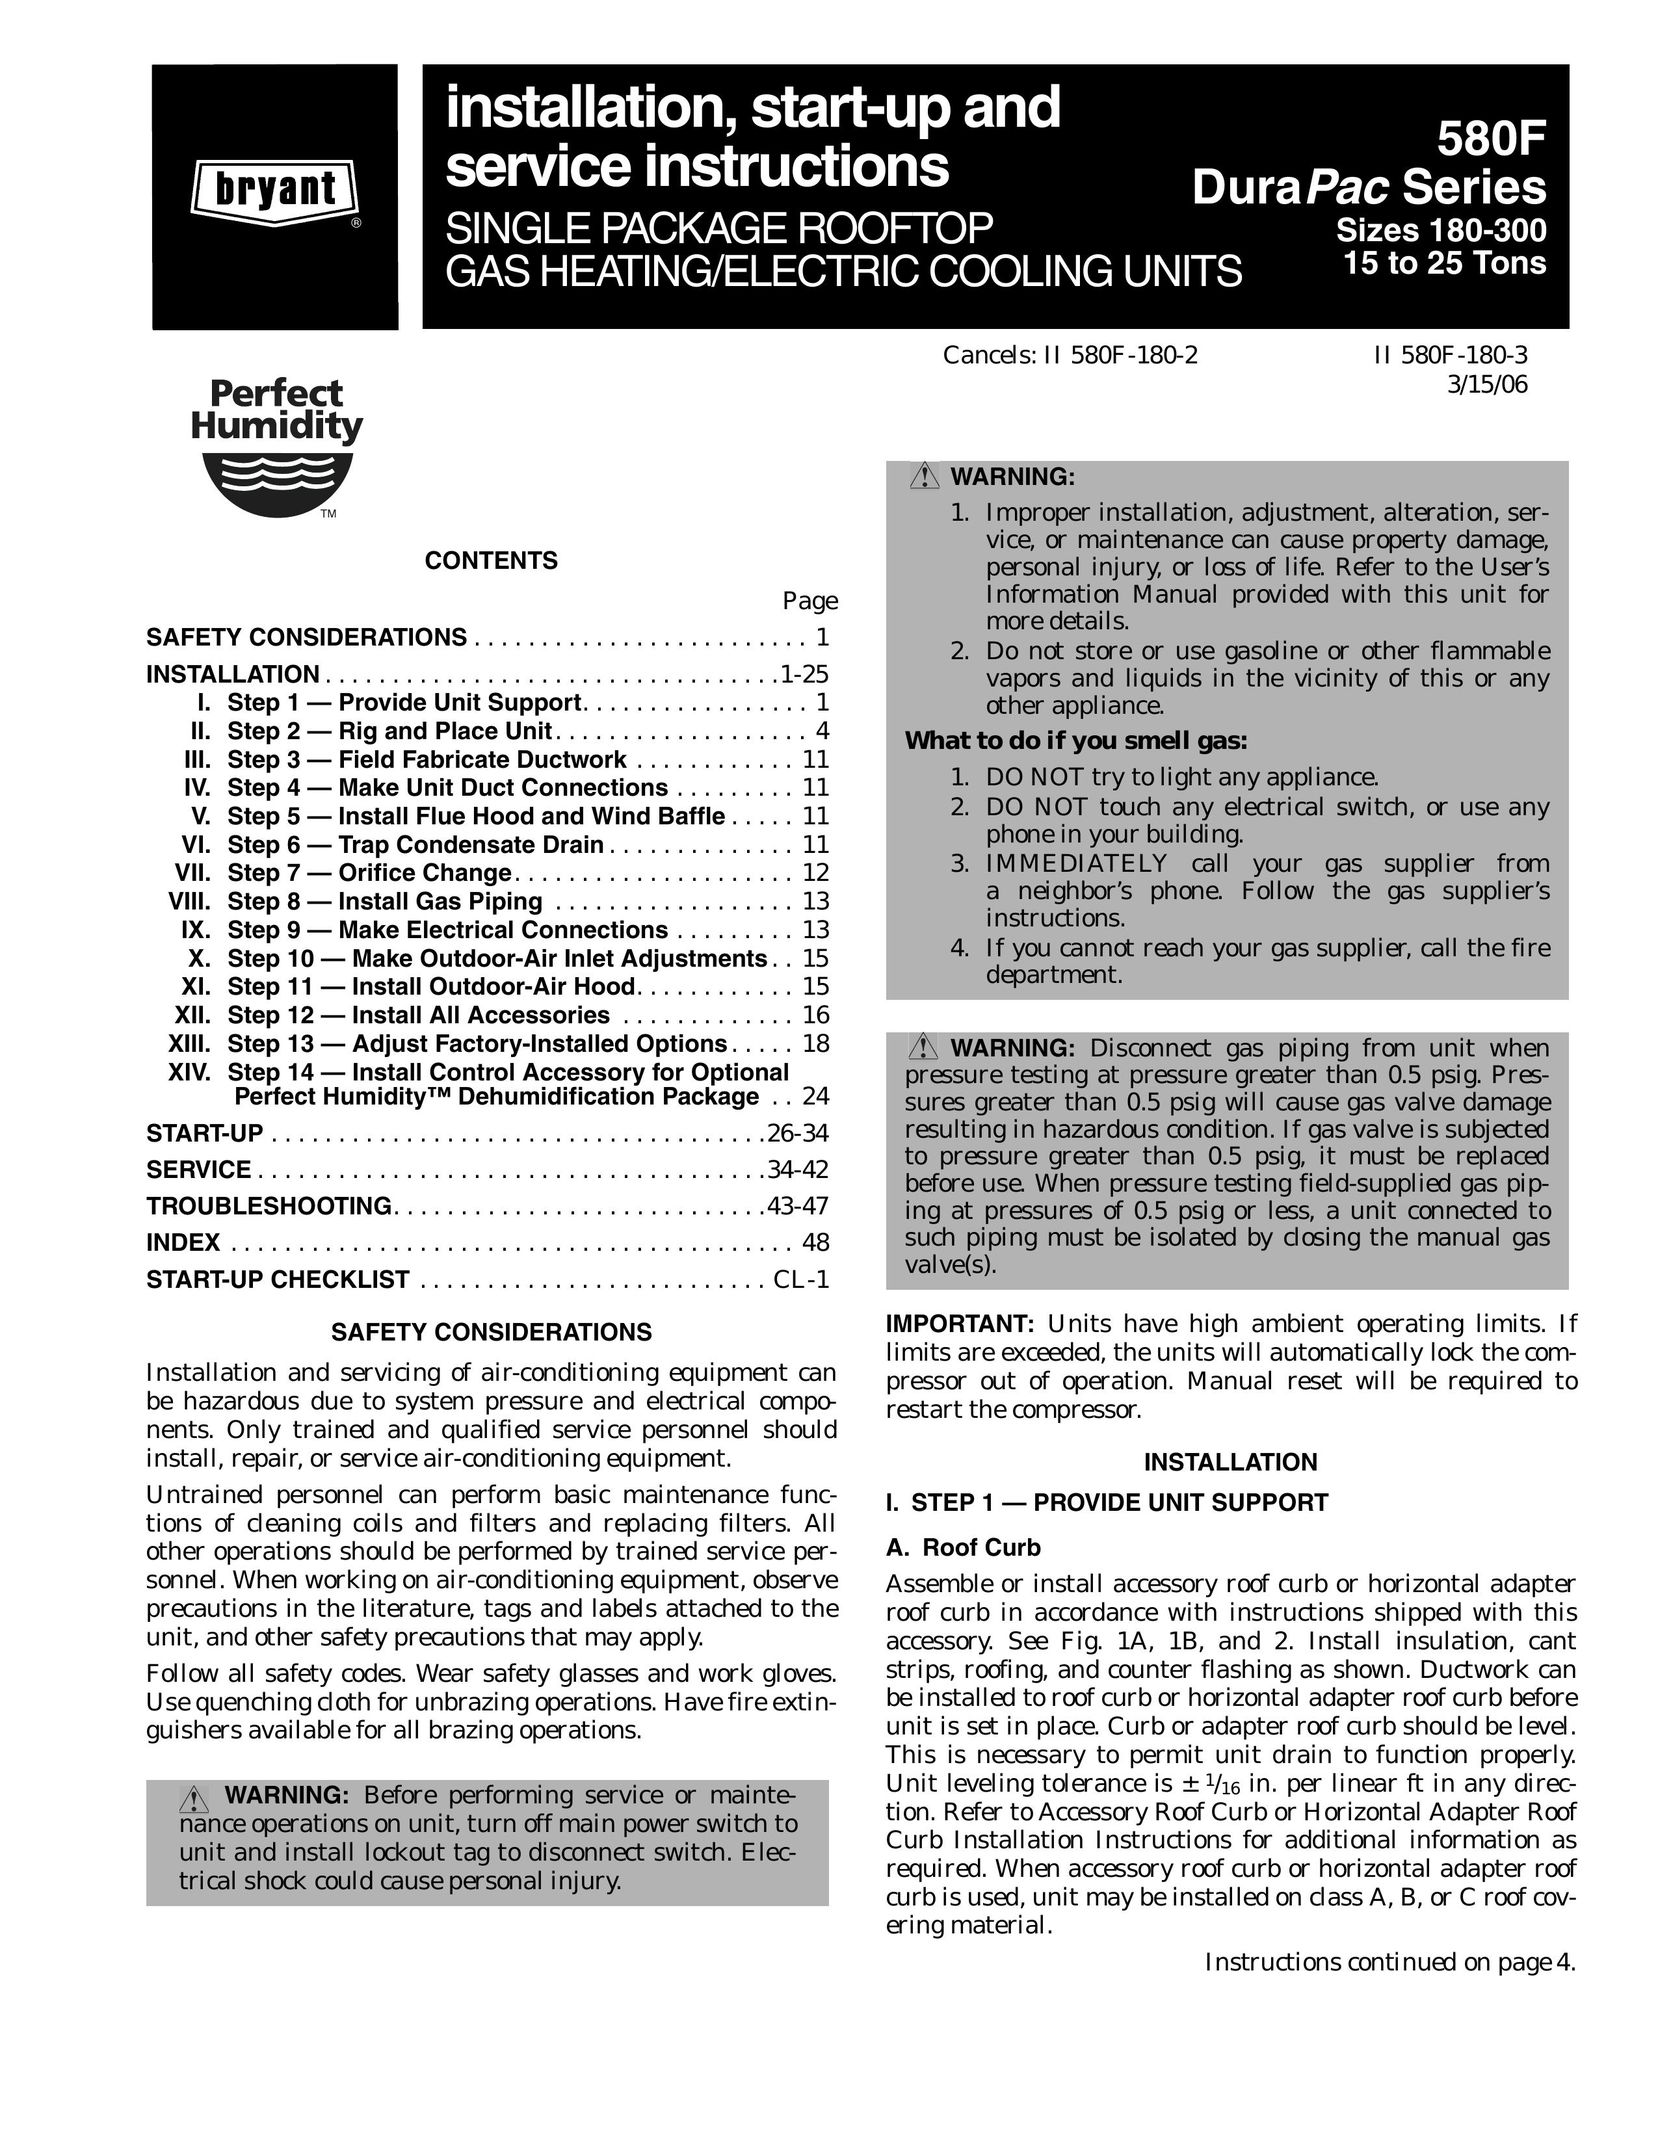 Bryant 580F Gas Heater User Manual